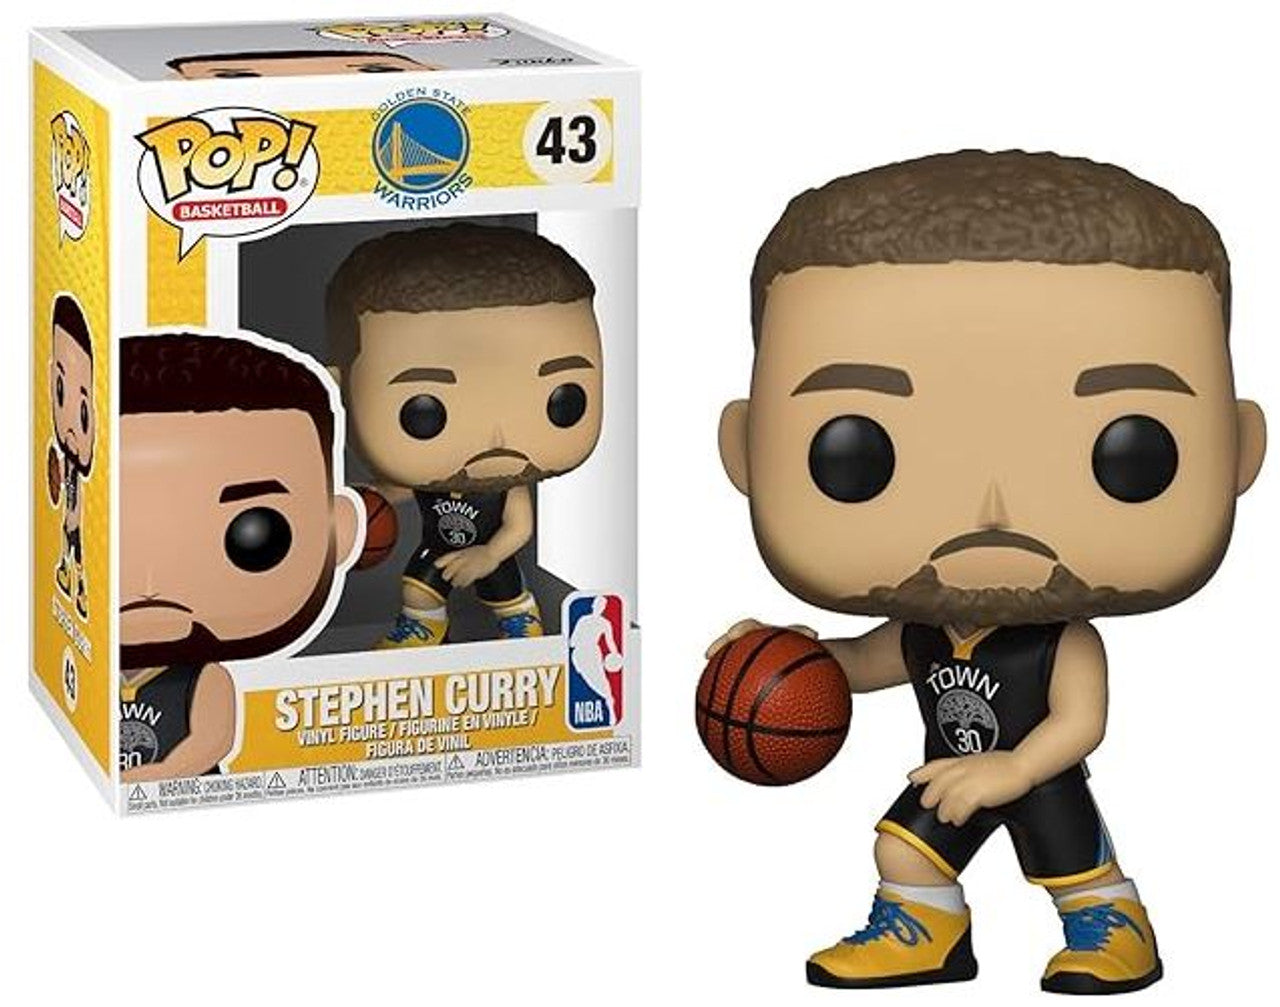 Pop! Series 2 Stephen Curry Golden State Warriors